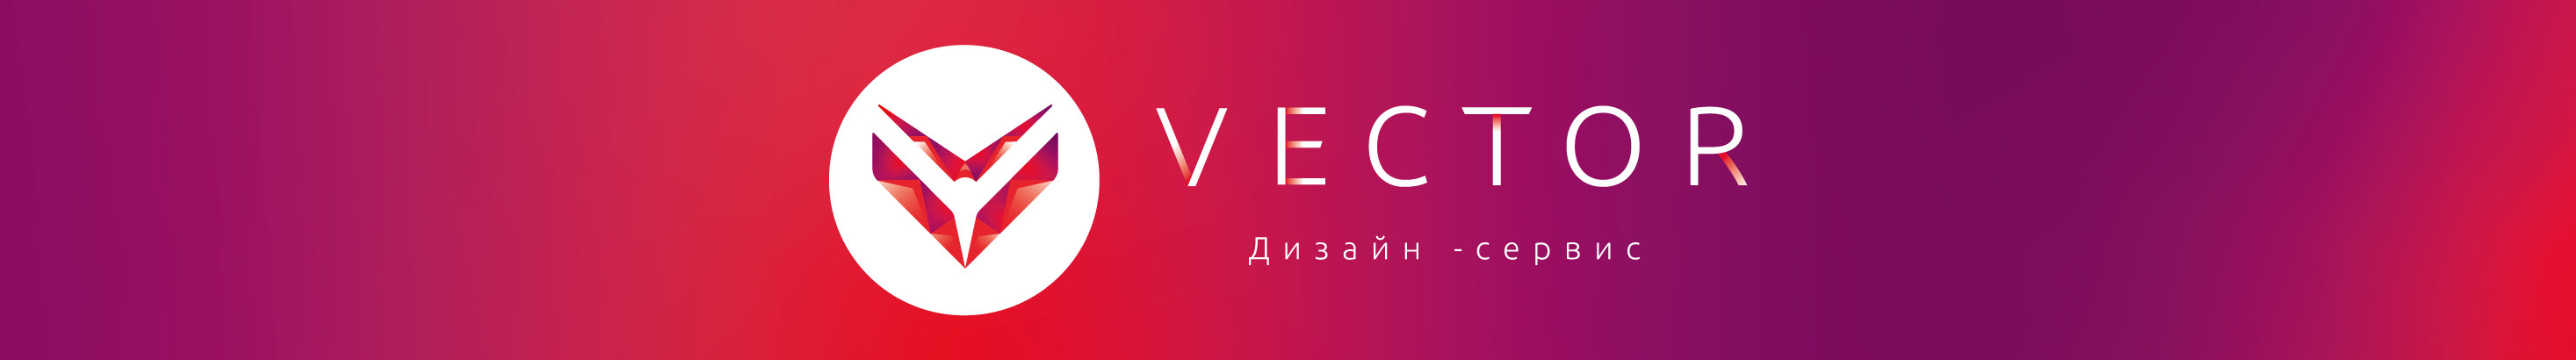 Victor Kraikov's profile banner